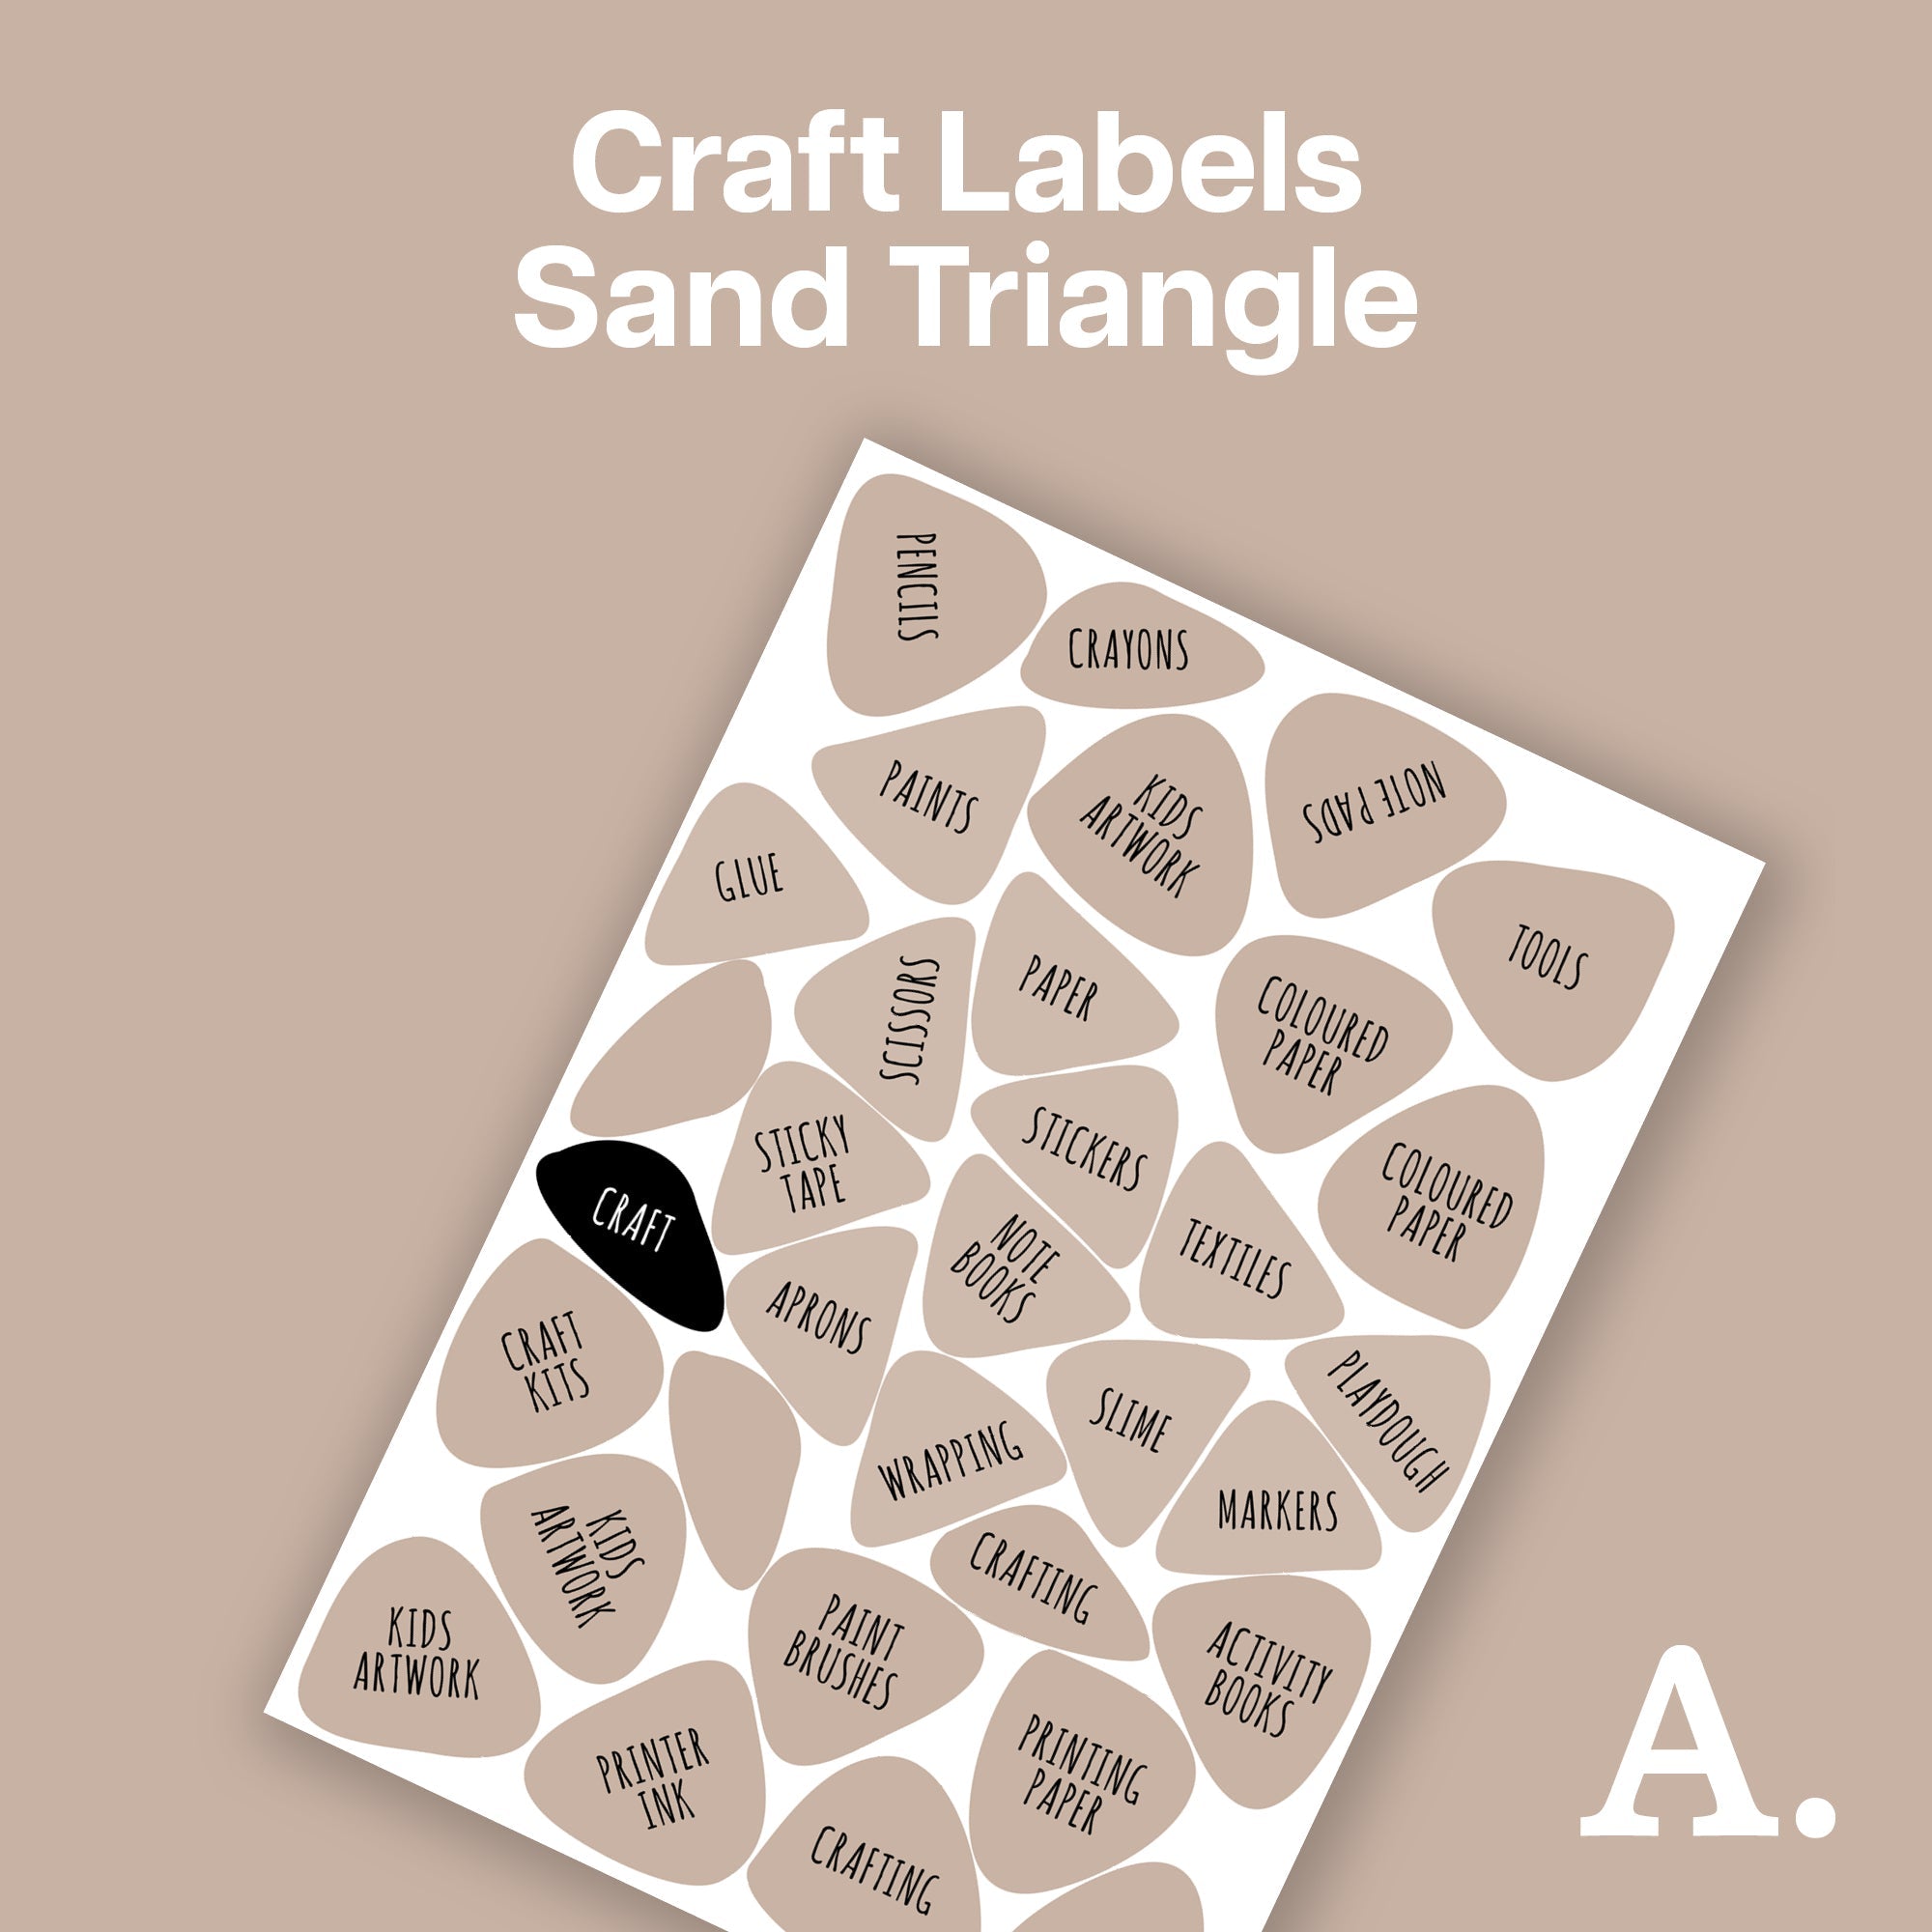 Craft Labels - Sand Triangles Organisation